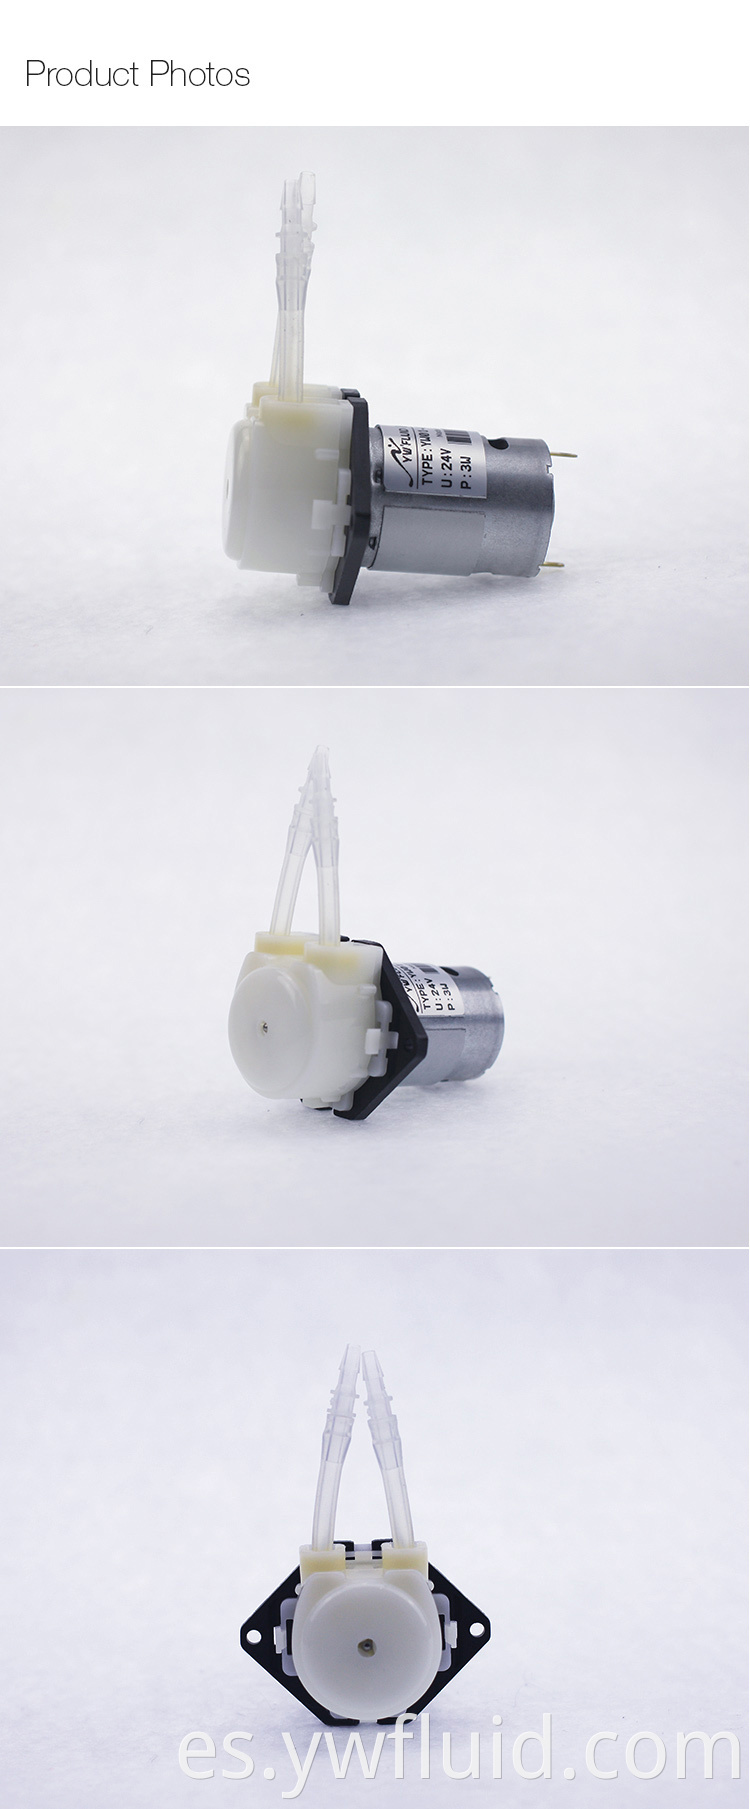 Bomba de agua peristáltica pequeña de buena calidad dc motor12 / 24V con certificado CE uso de medicamentos impresos foa